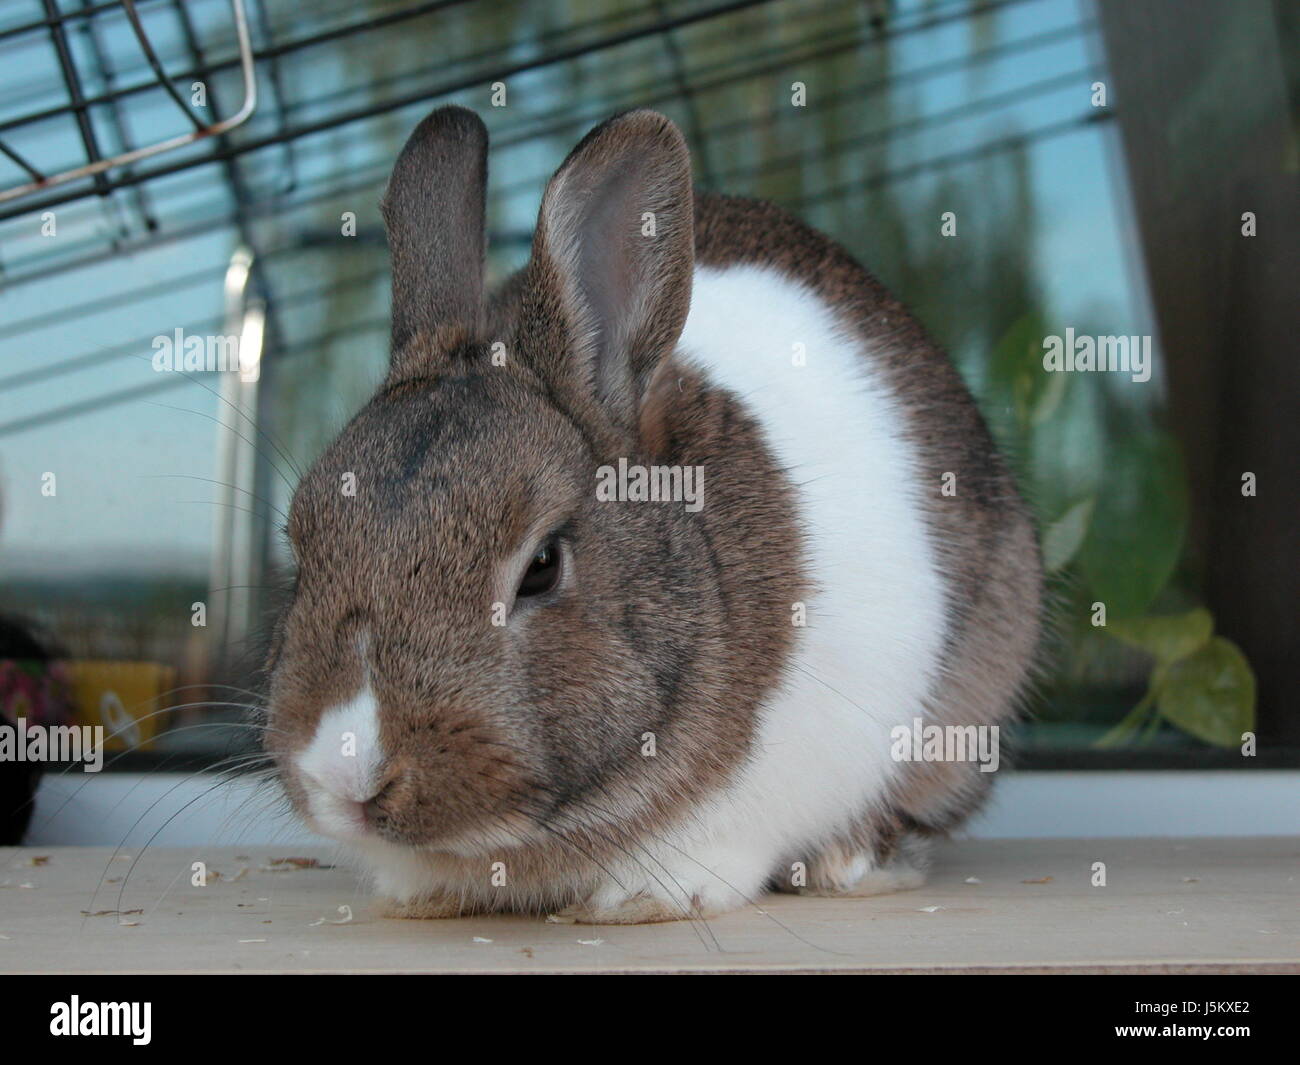 animal animals portrait skin rabbit hare claws hares snatch rabbits bunny  Stock Photo - Alamy